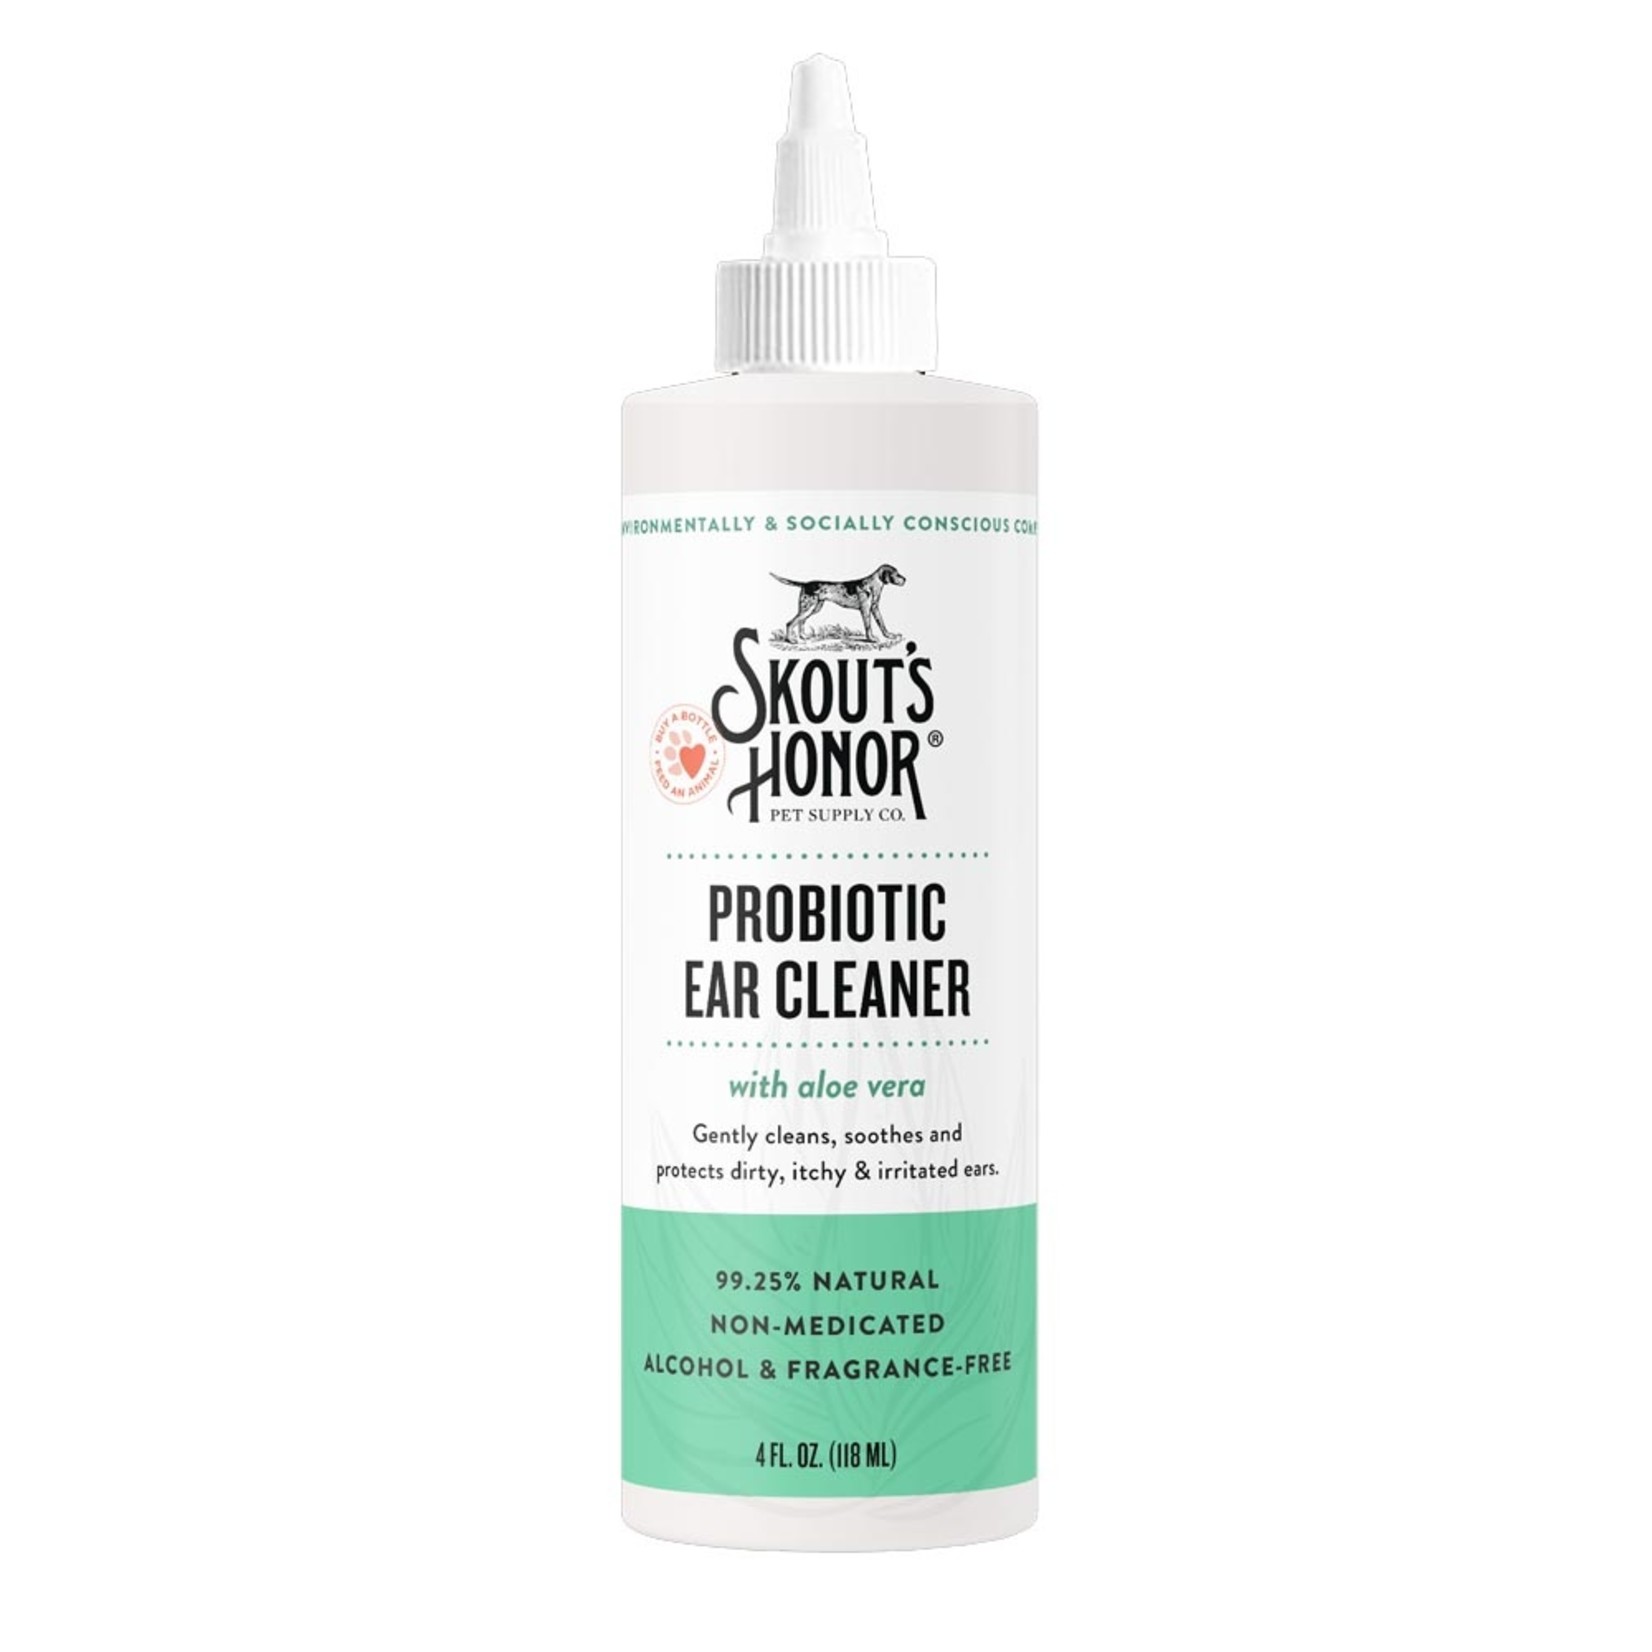 Skouts Honor probiotic ear cleanser